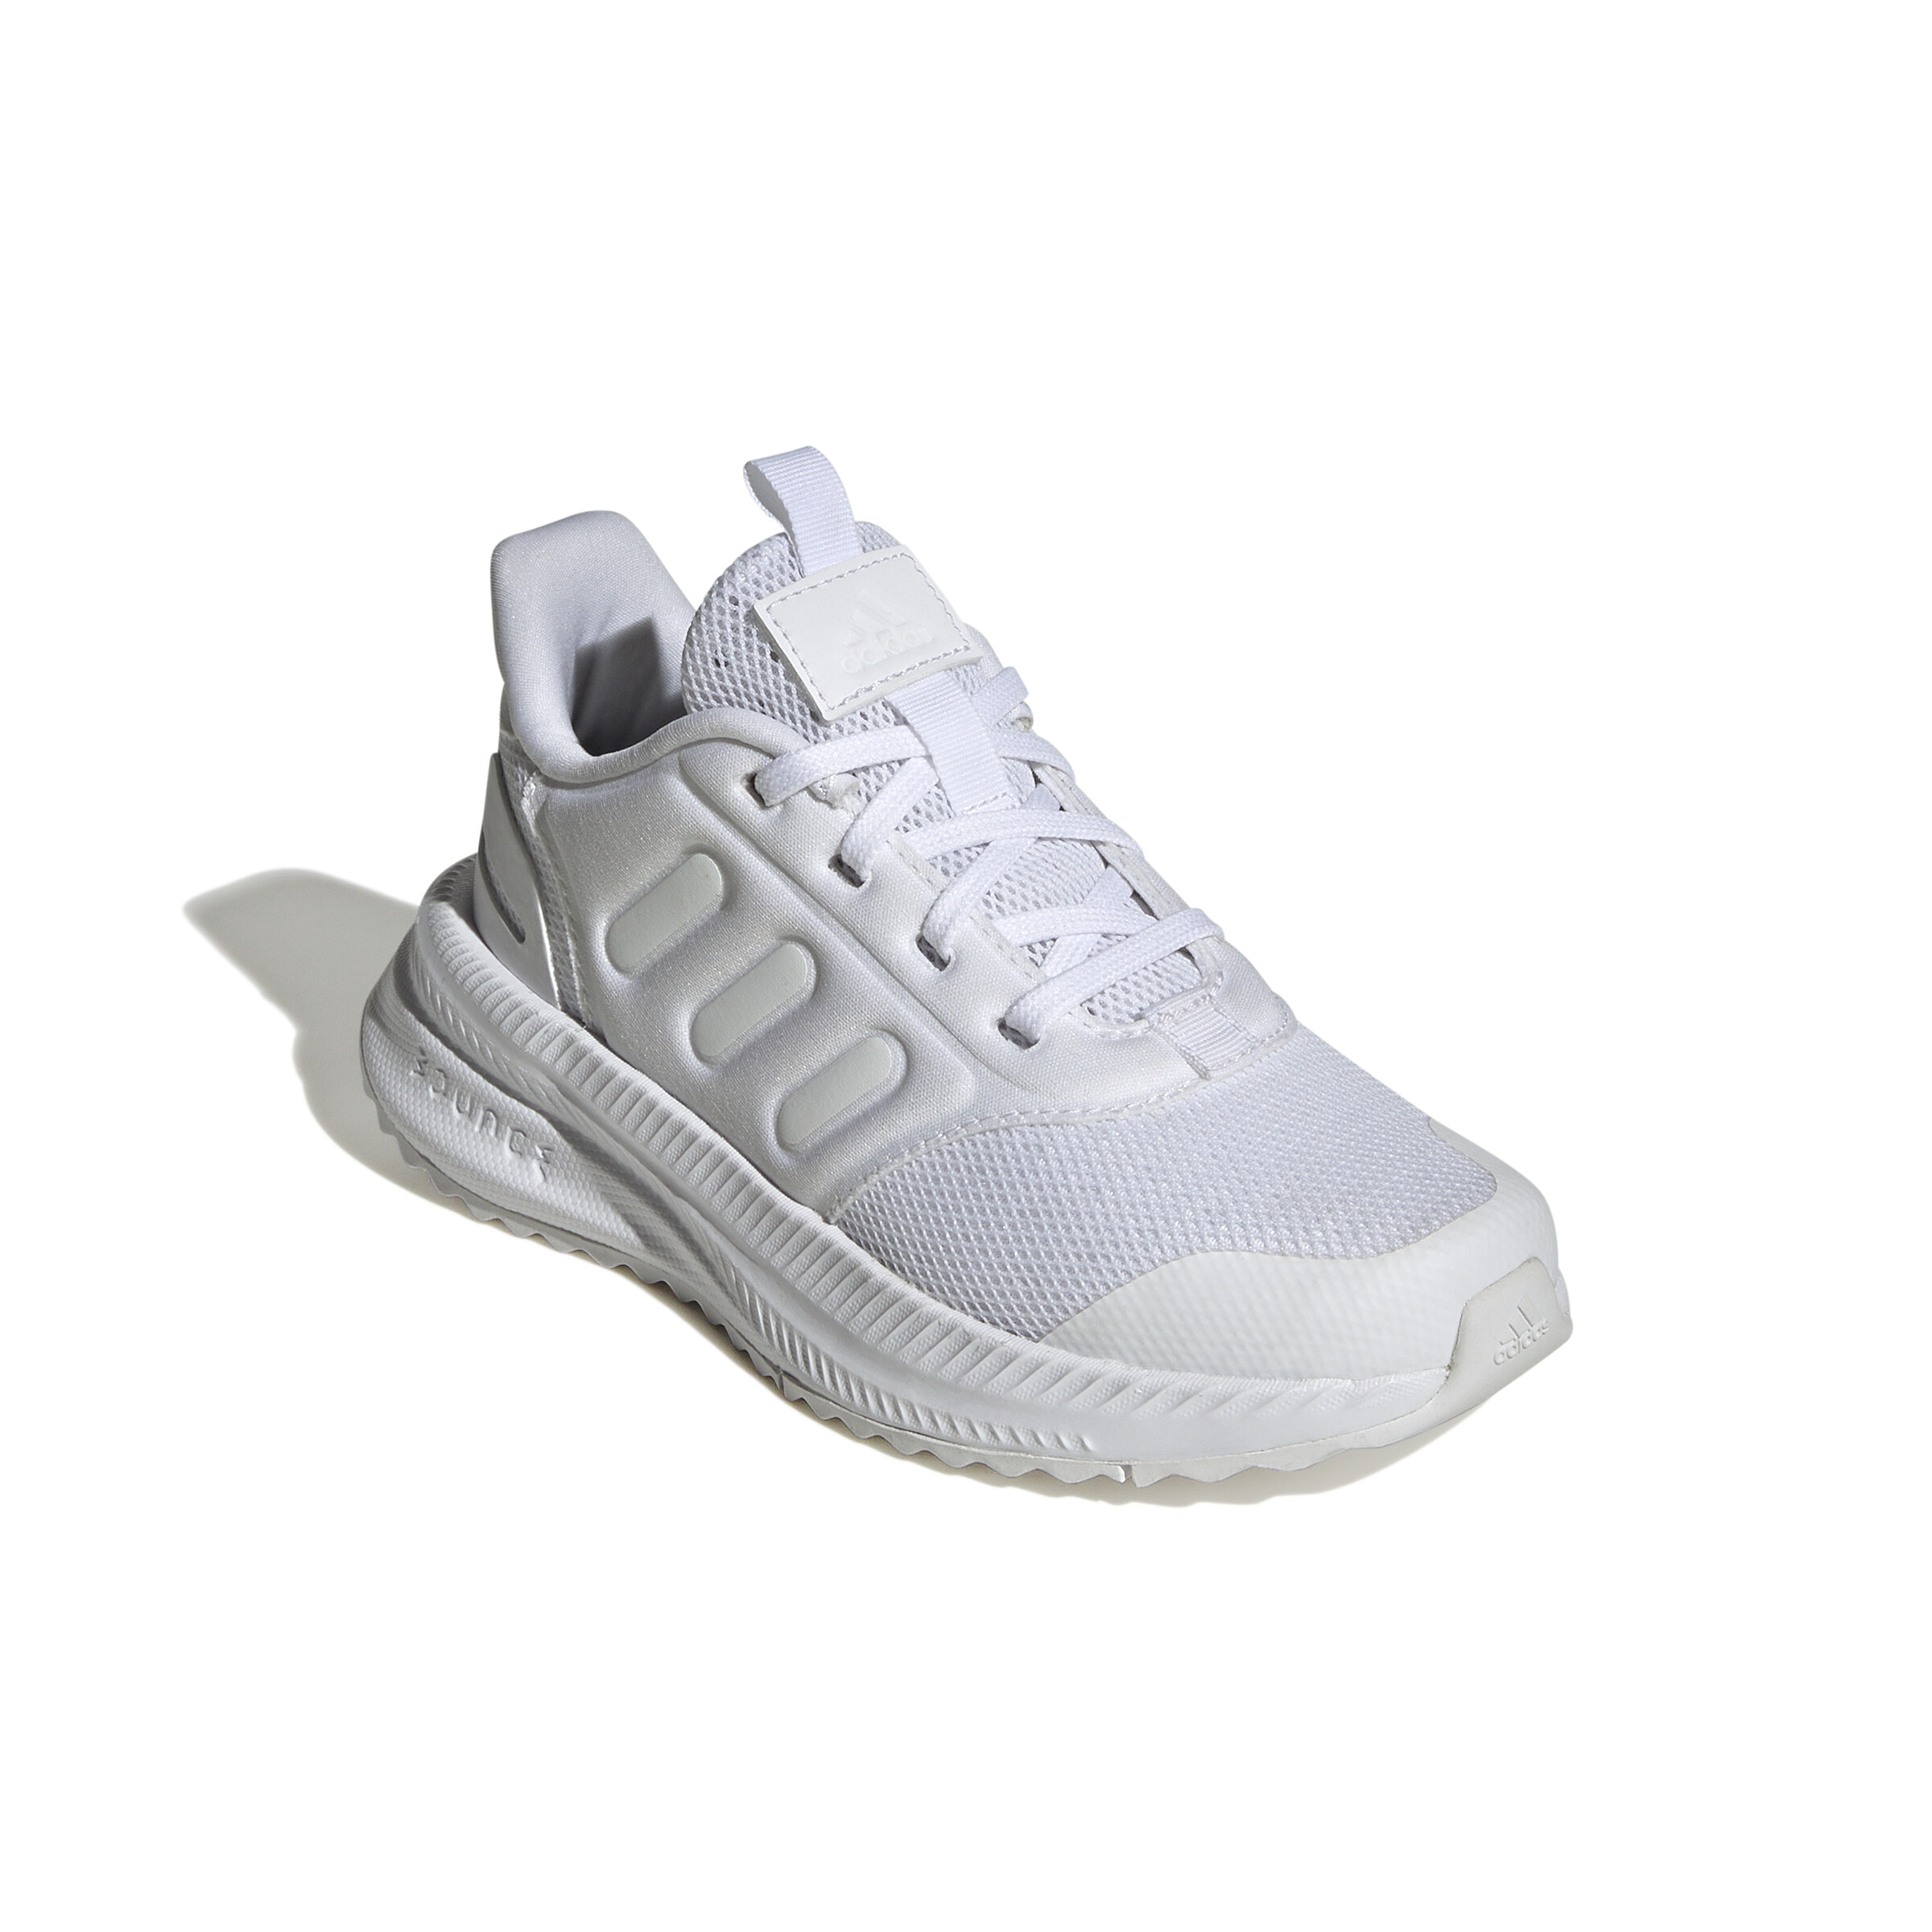 Incaltaminte Fete adidas Kids X-PLR Phase (Little Kid) Footwear WhiteFootwear WhiteCore Black